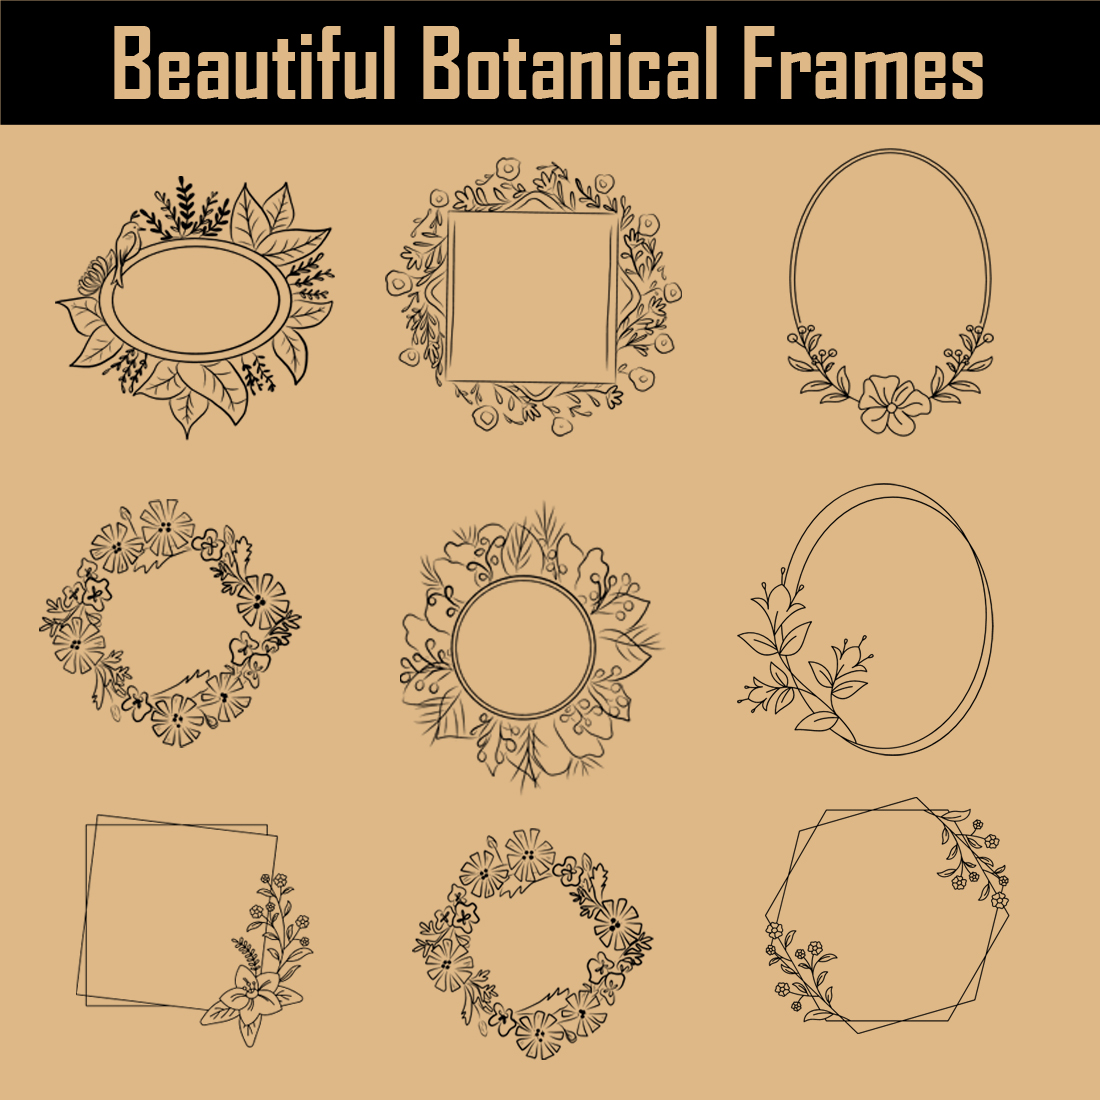 Prints of beautiful botanical frames.